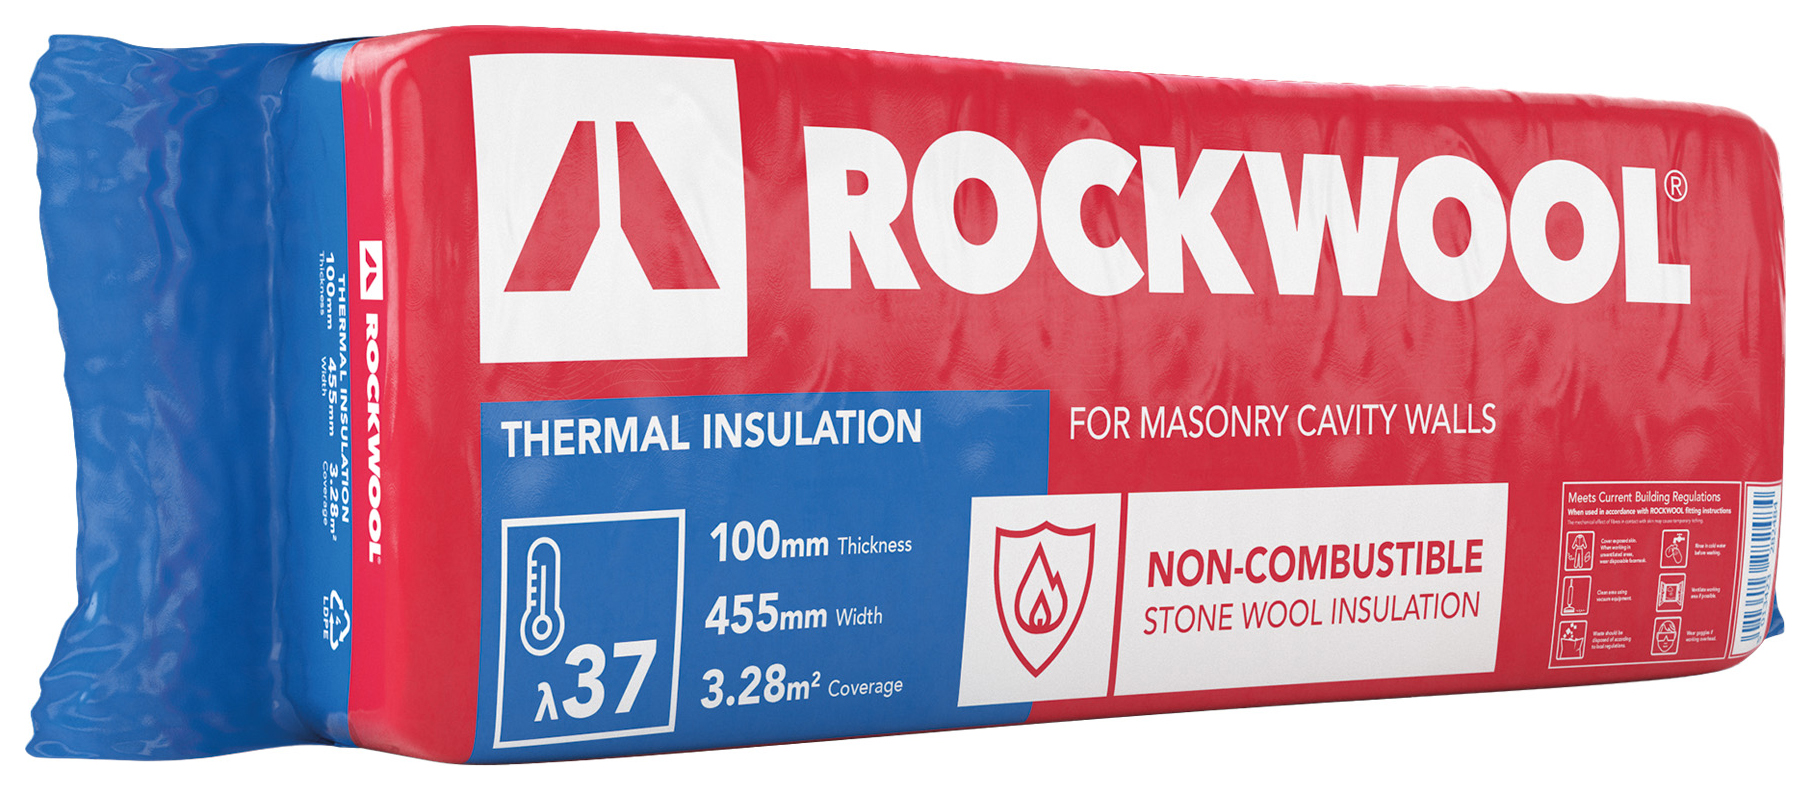 Rockwool 37 Thermal Insulation Cavity Batt - 100 x 455 x 1.2m